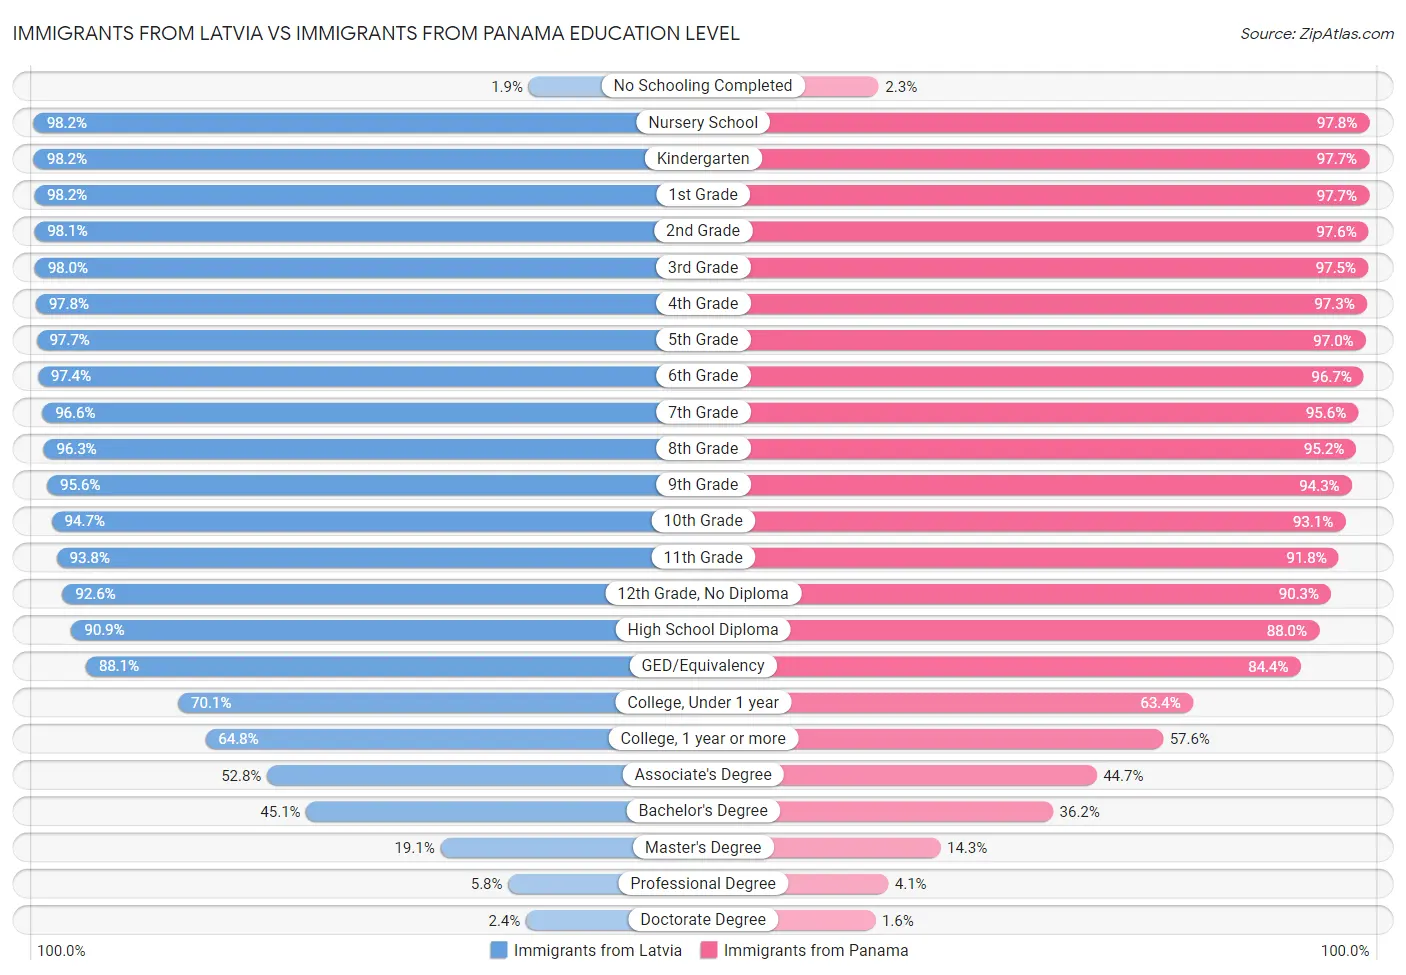 Immigrants from Latvia vs Immigrants from Panama Education Level